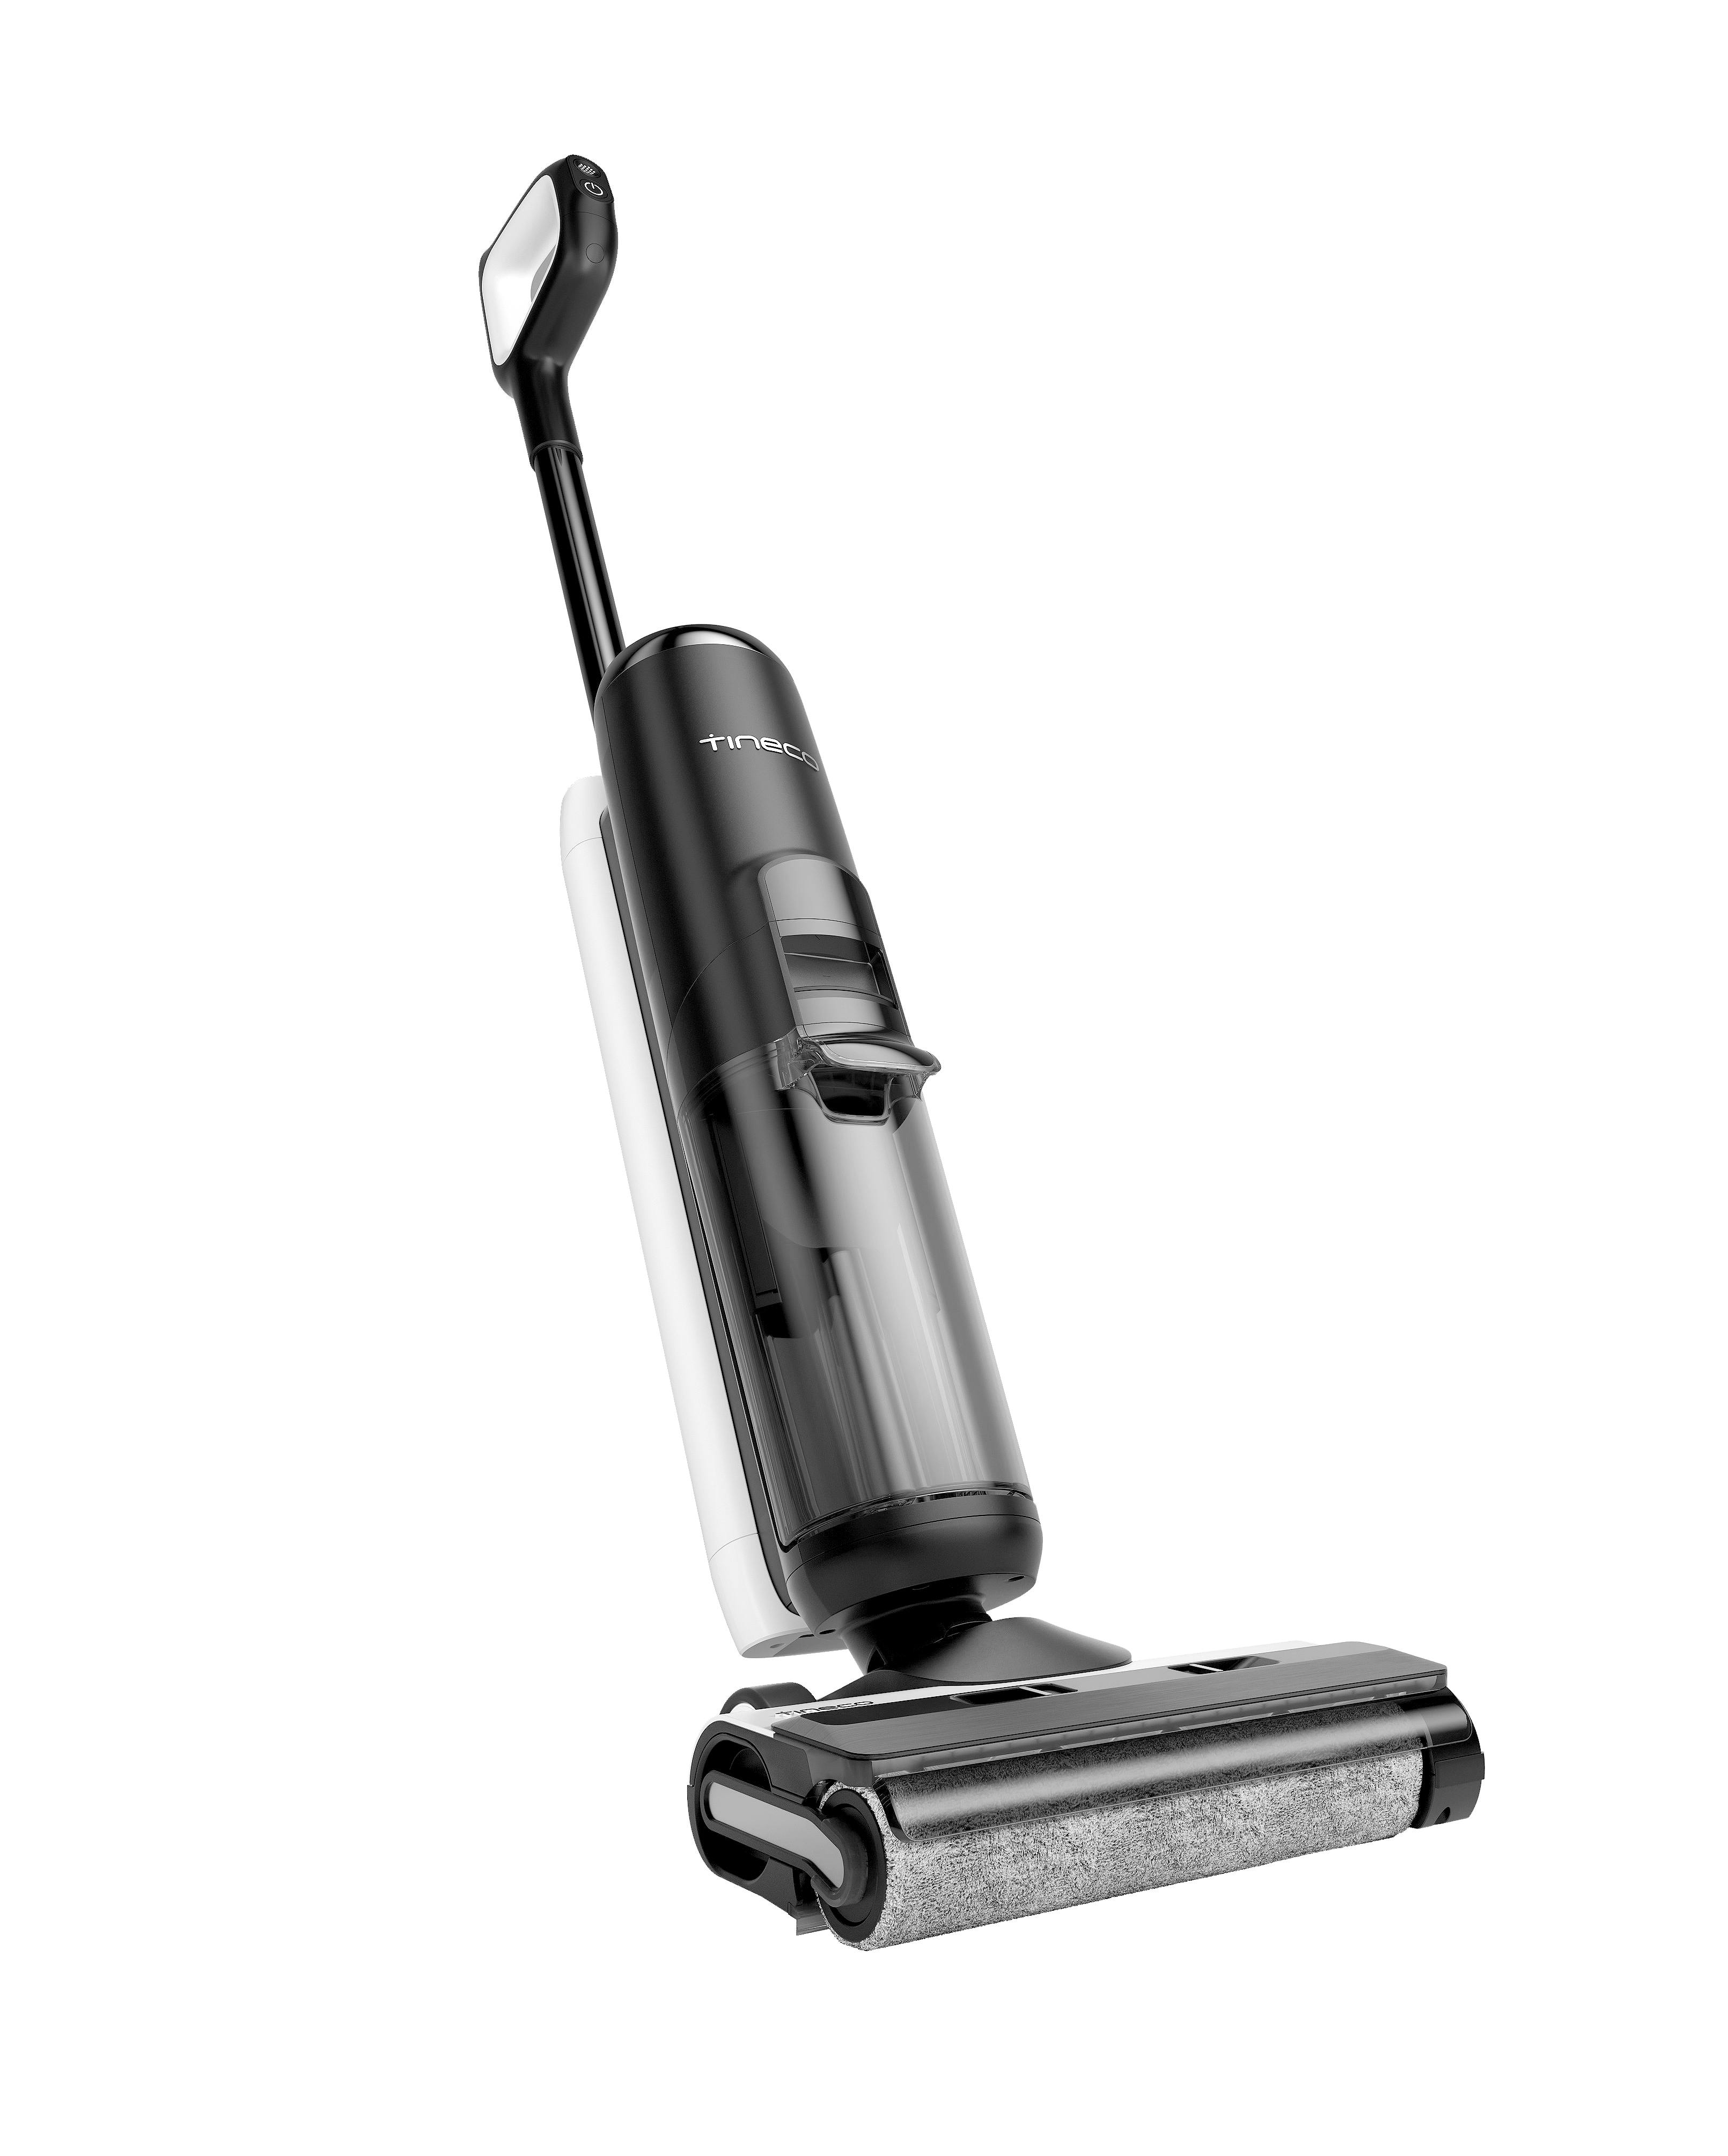 Introducing Tineco FLOOR ONE S5 Smart Wet Dry Vacuum Cleaner